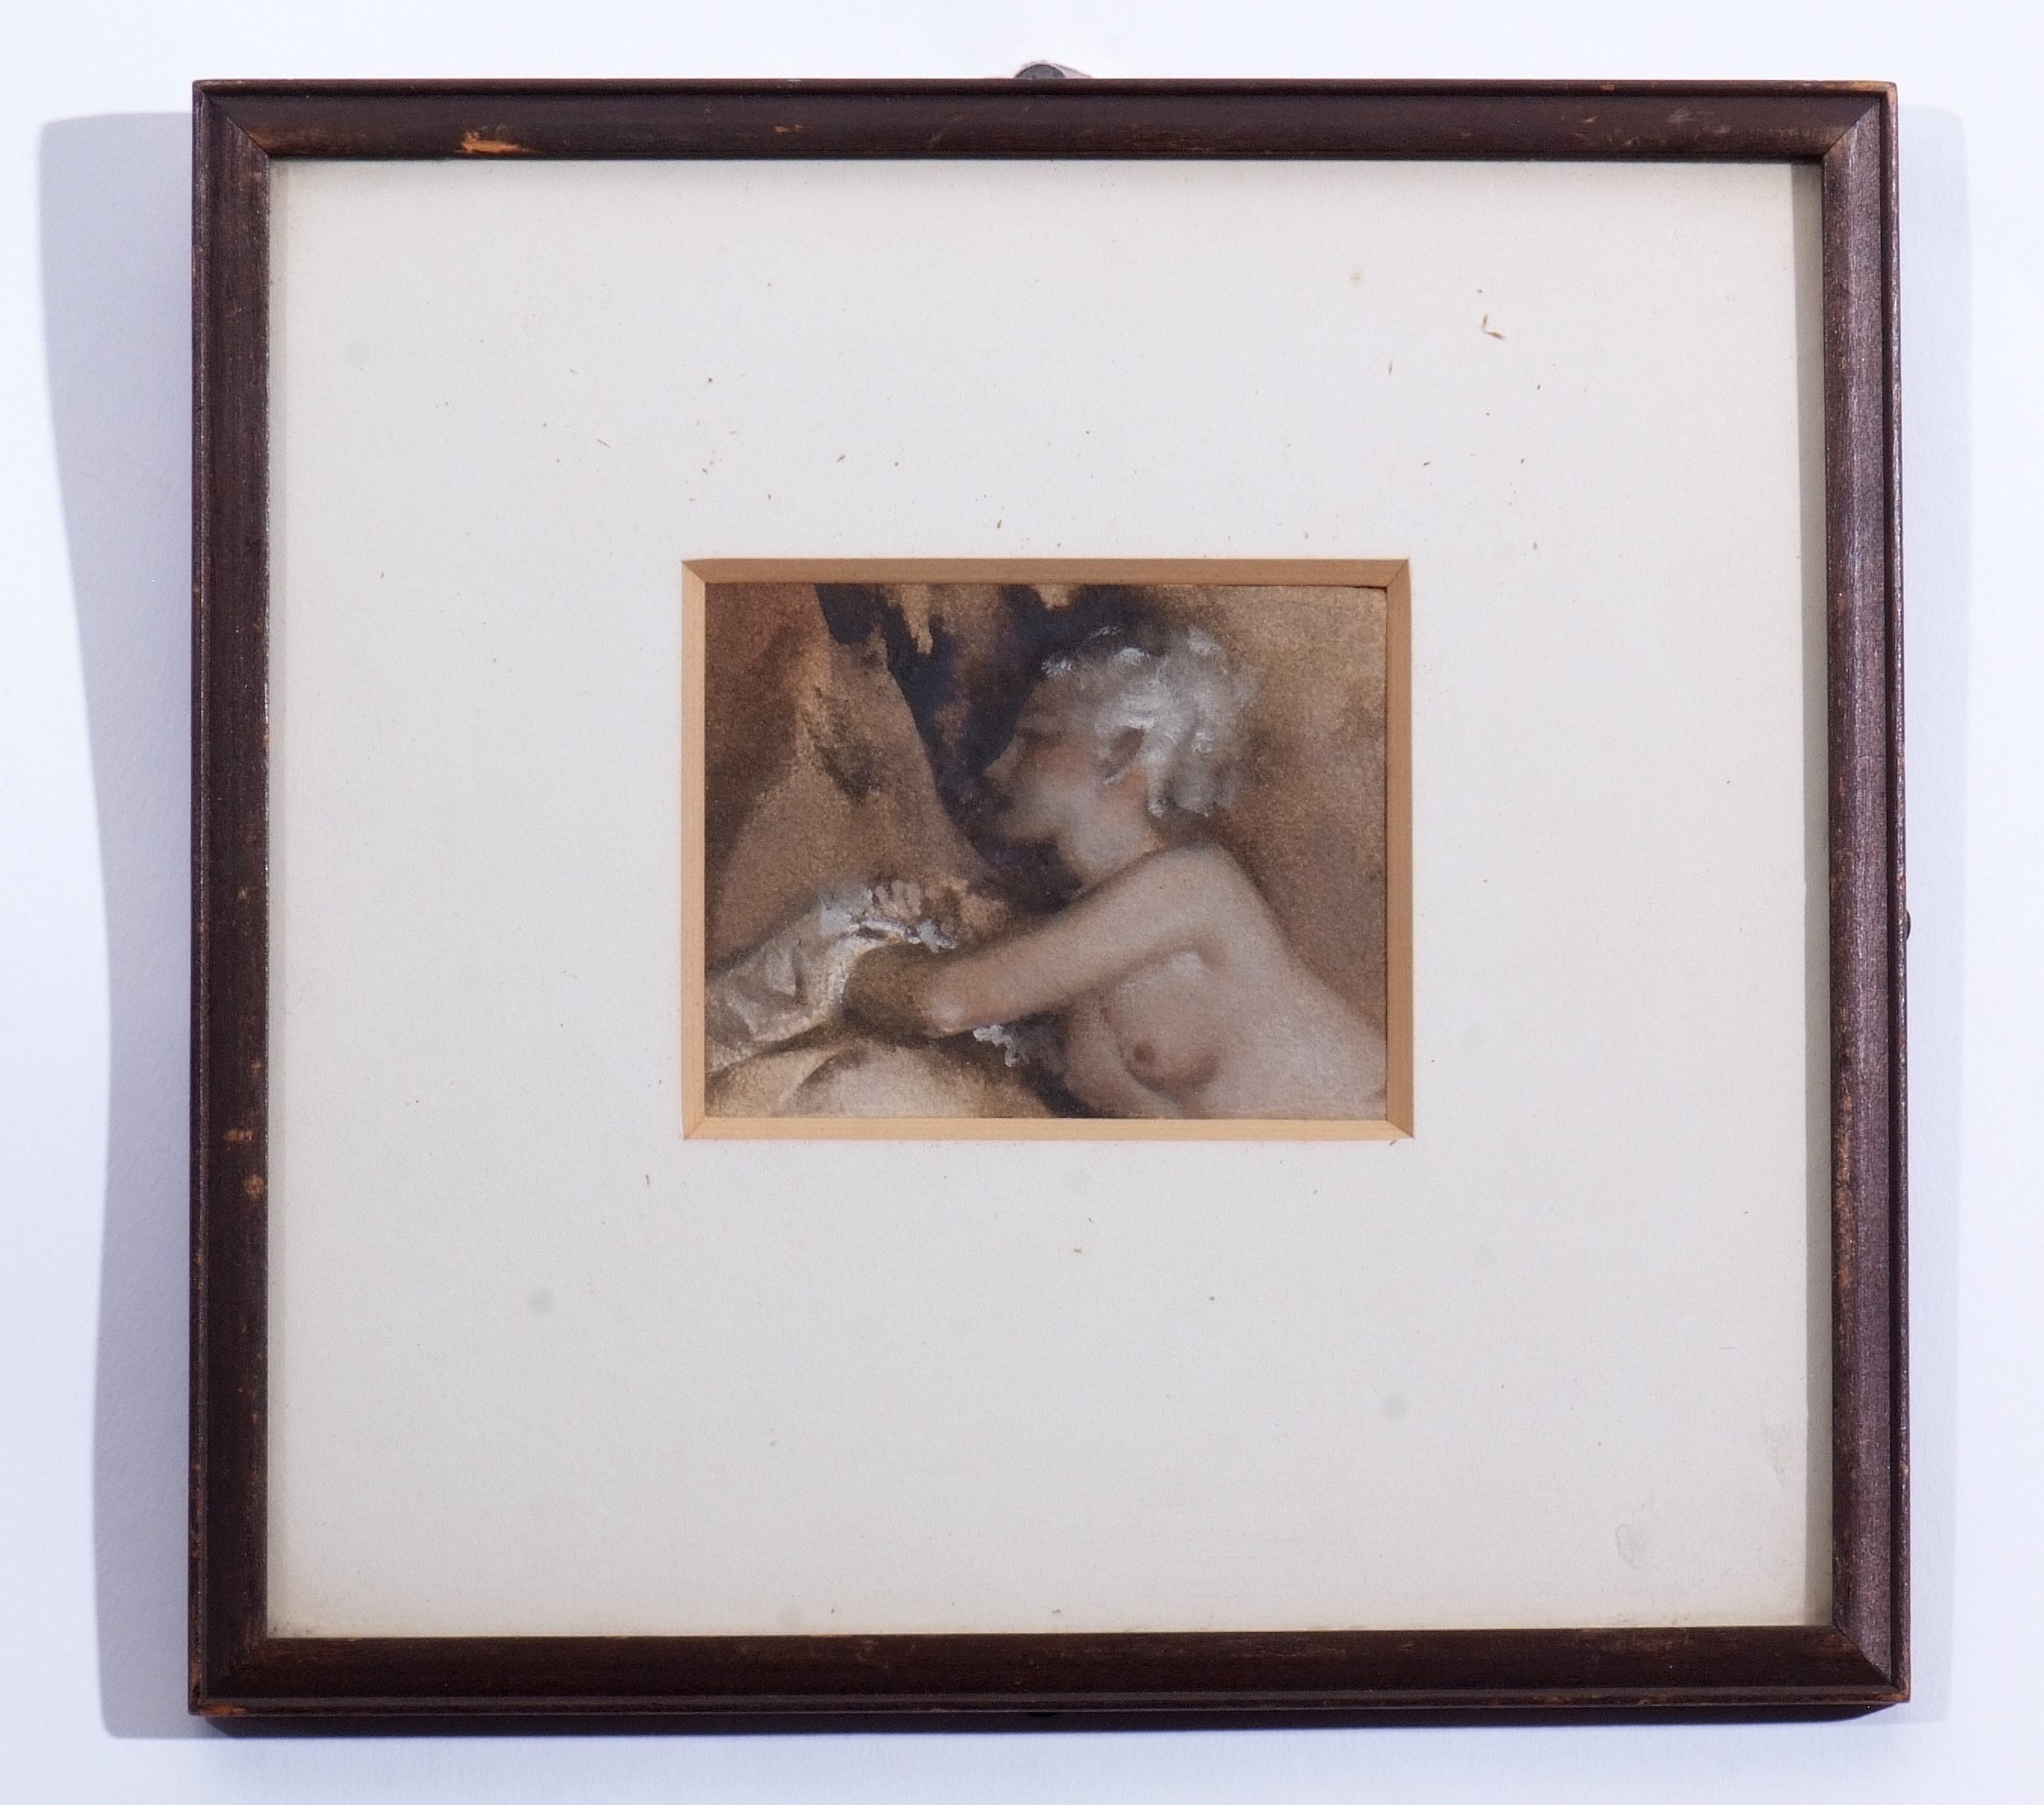 AR Sir William Russell Flint, RA, PRWS (1880-1969) Female nude, watercolour, 8 x 10cm - Image 2 of 2